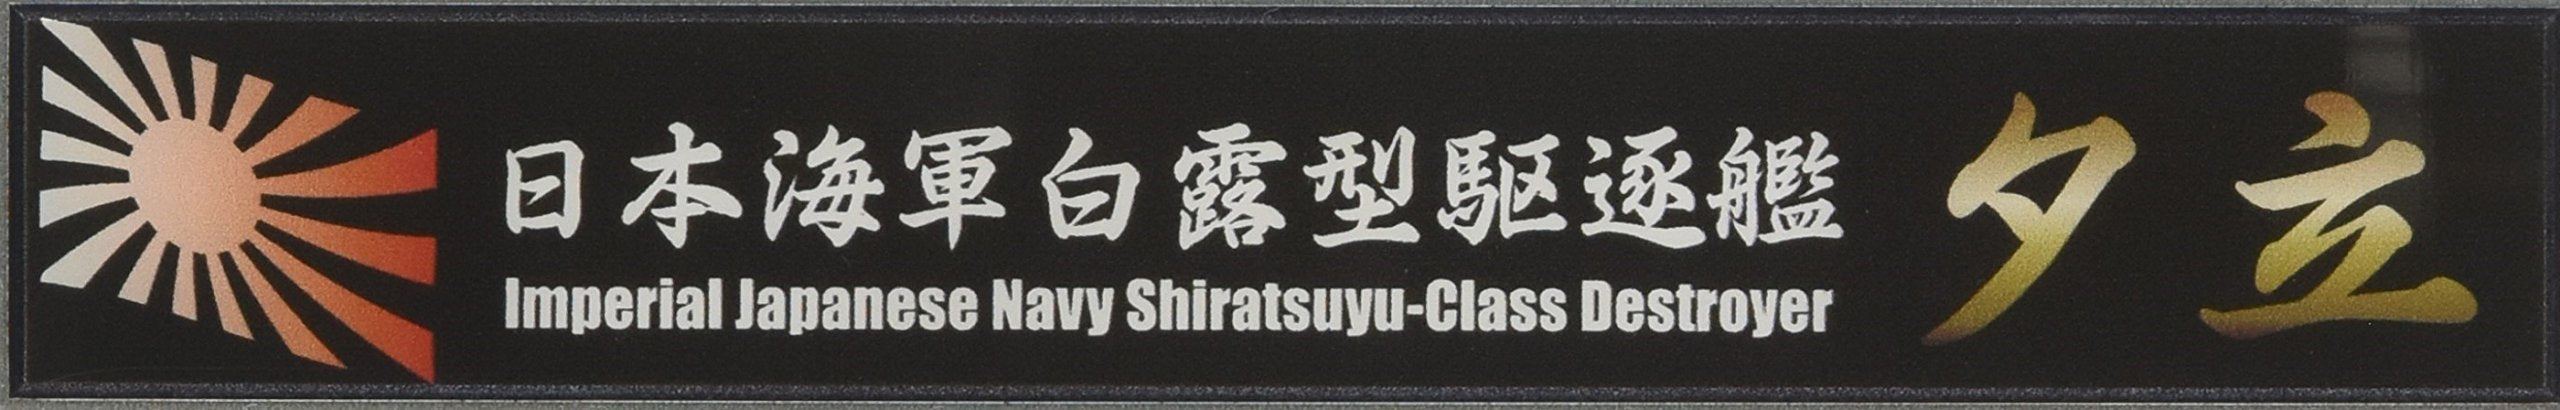 FUJIMI Ship Name Plate Series No.108 Ijn Destroyer Yudachi